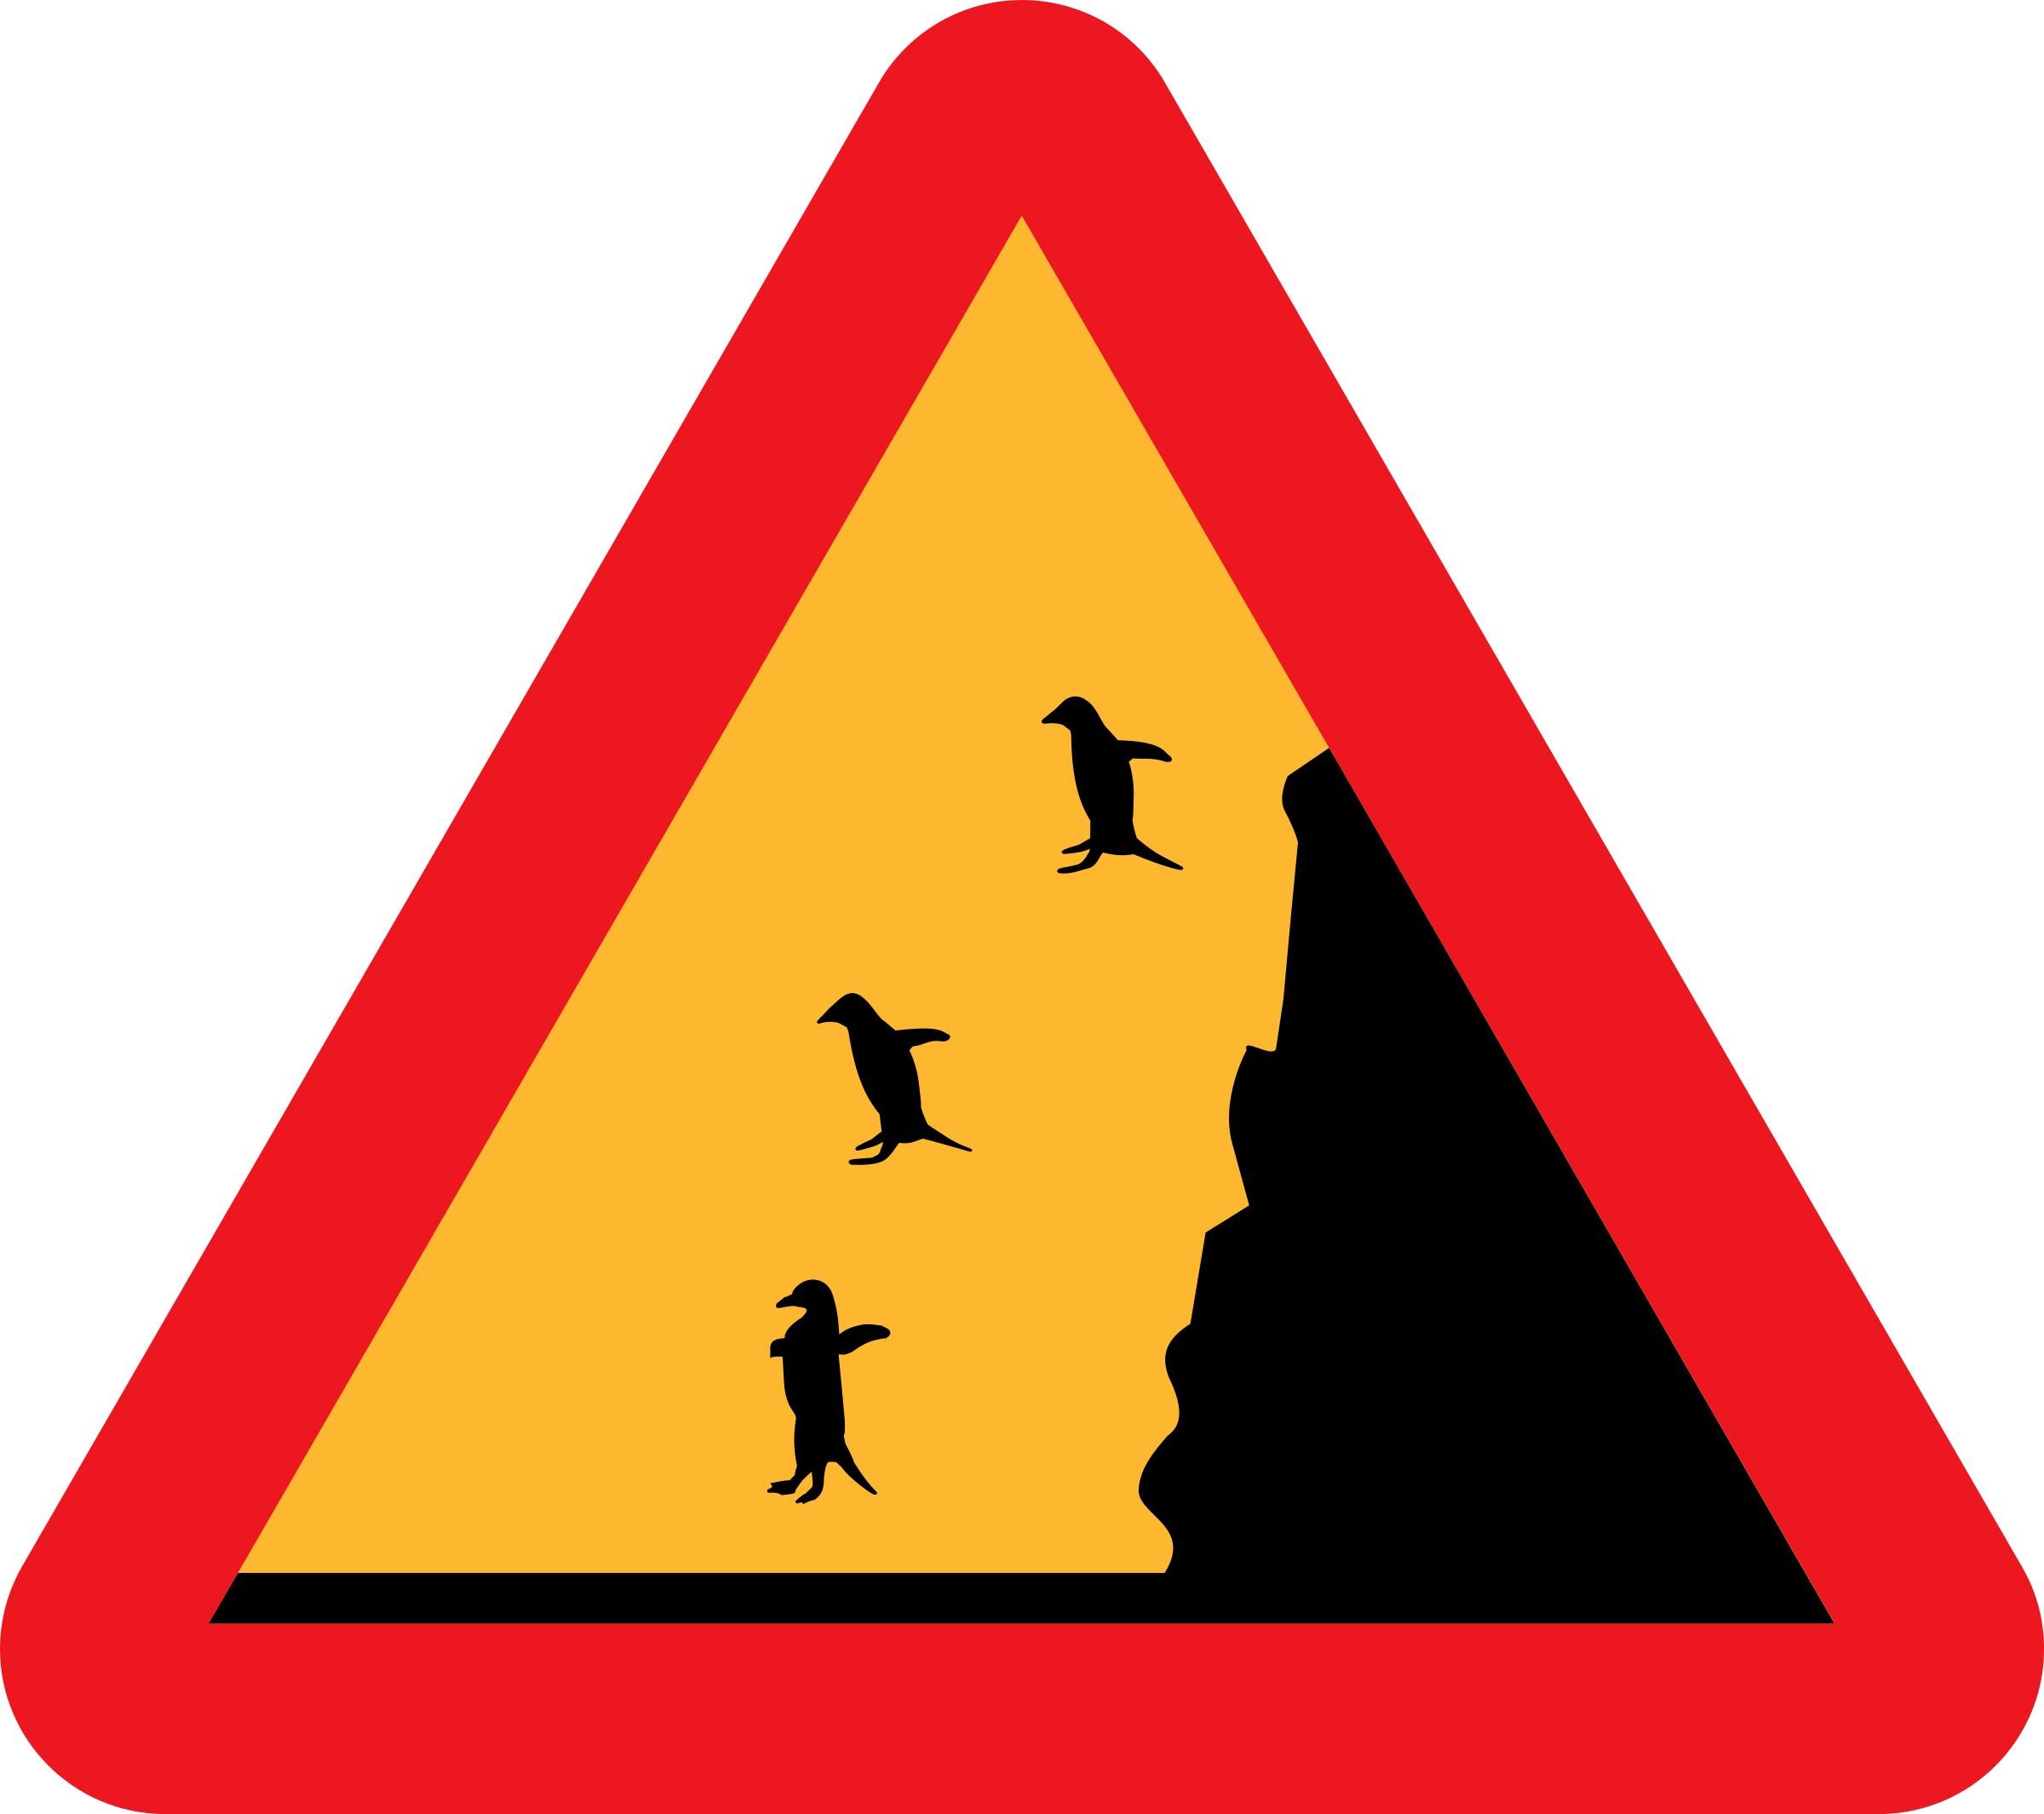 Warning falling penguins PNG icons